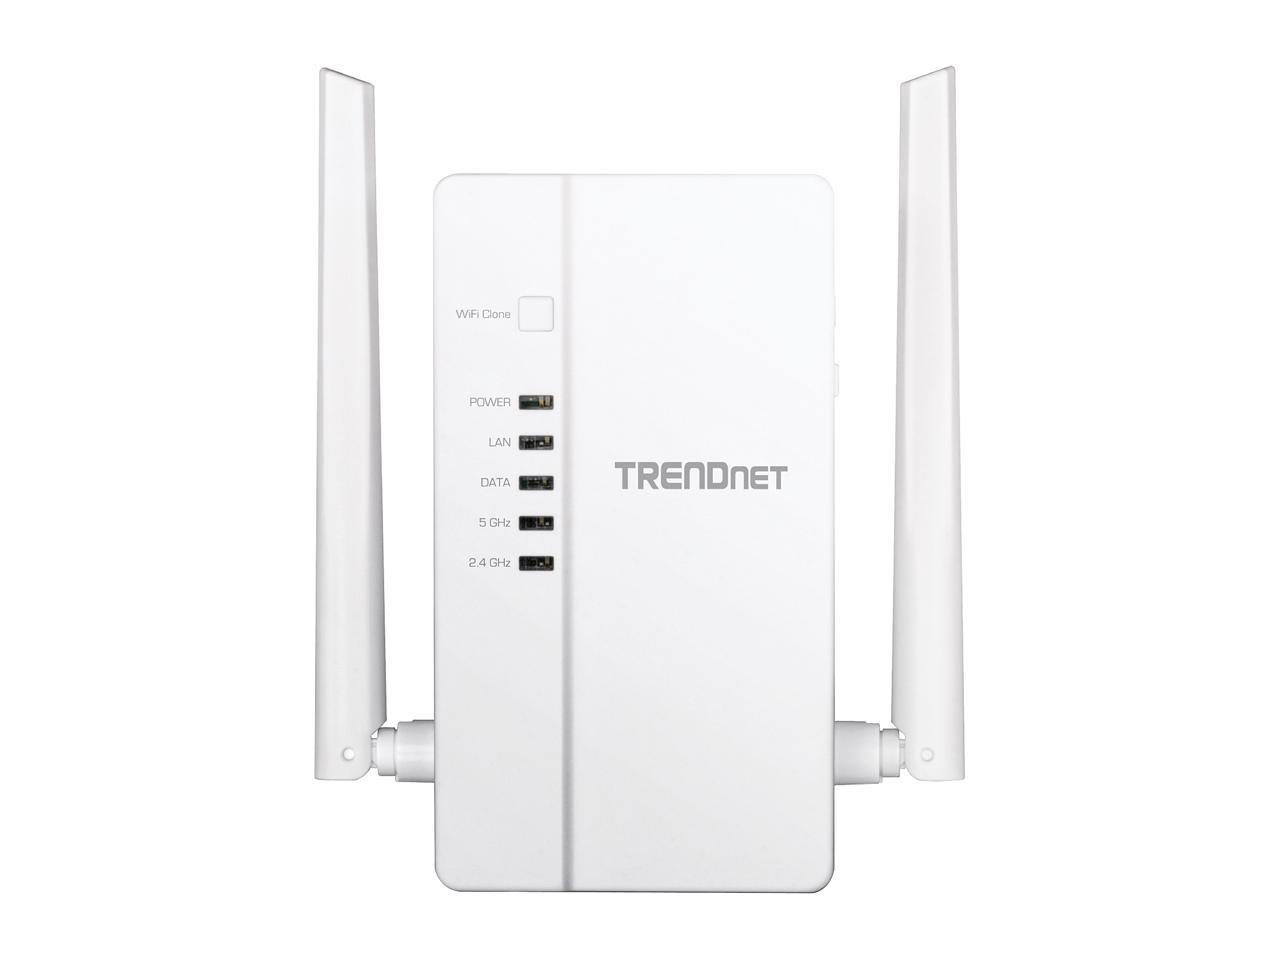 TRENDnet TPL-430AP Wi-Fi Everywhere Powerline 1200 AV2 Access Point